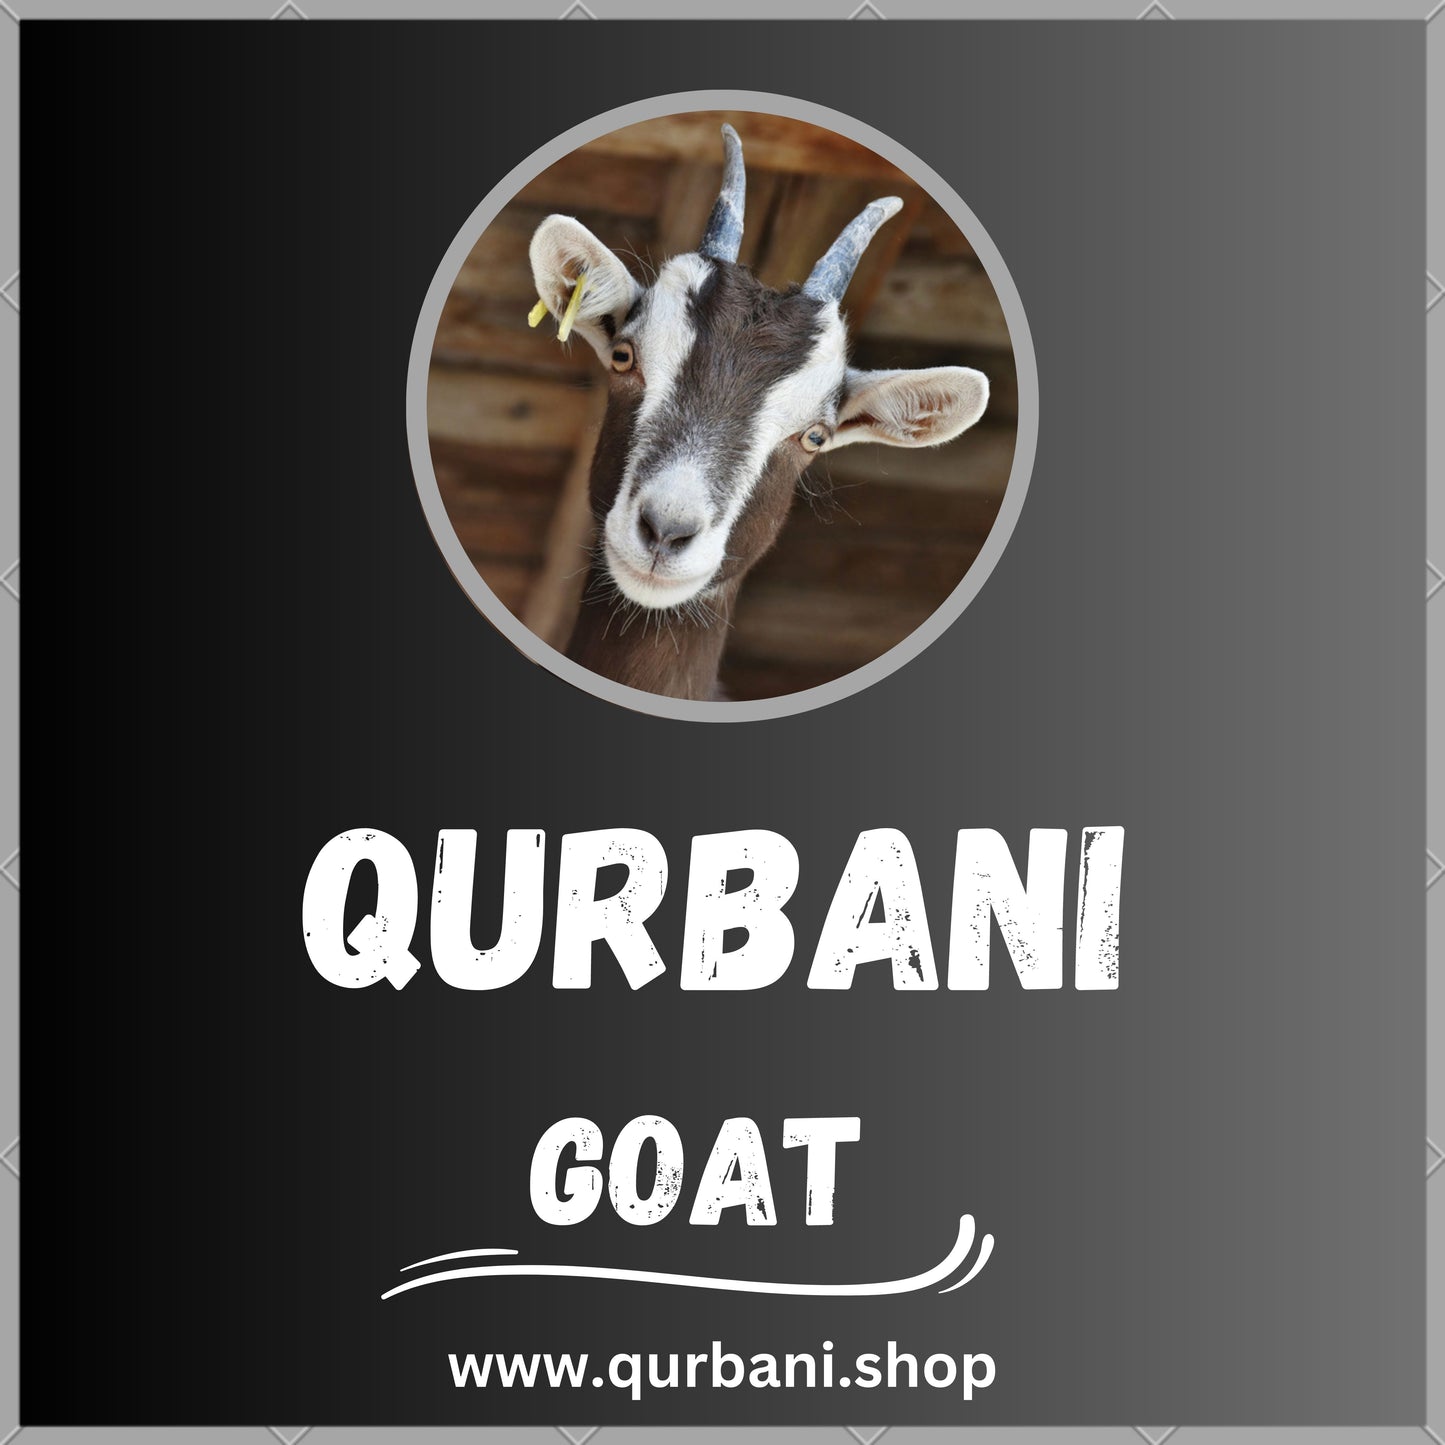 Perform Qurbani in Austin - Book Your Eid Sacrifice